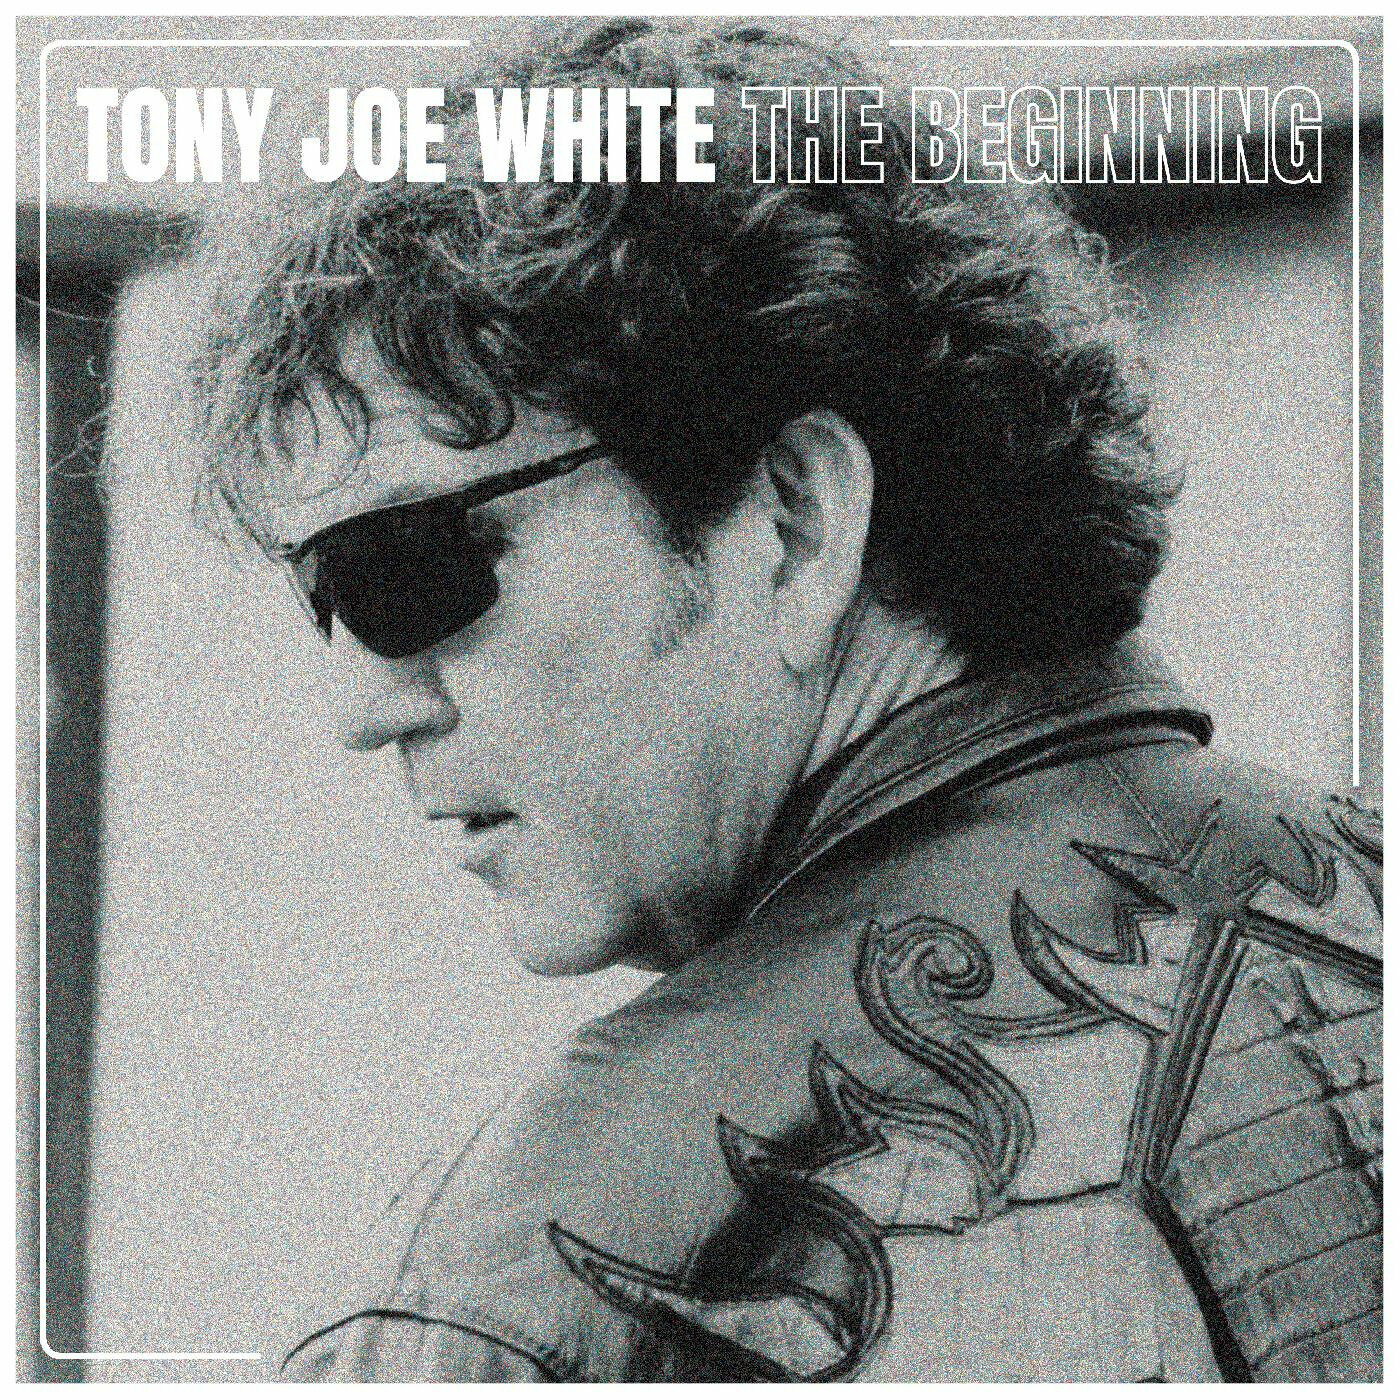 Disco de vinil Tony Joe White - The Beginning (LP)